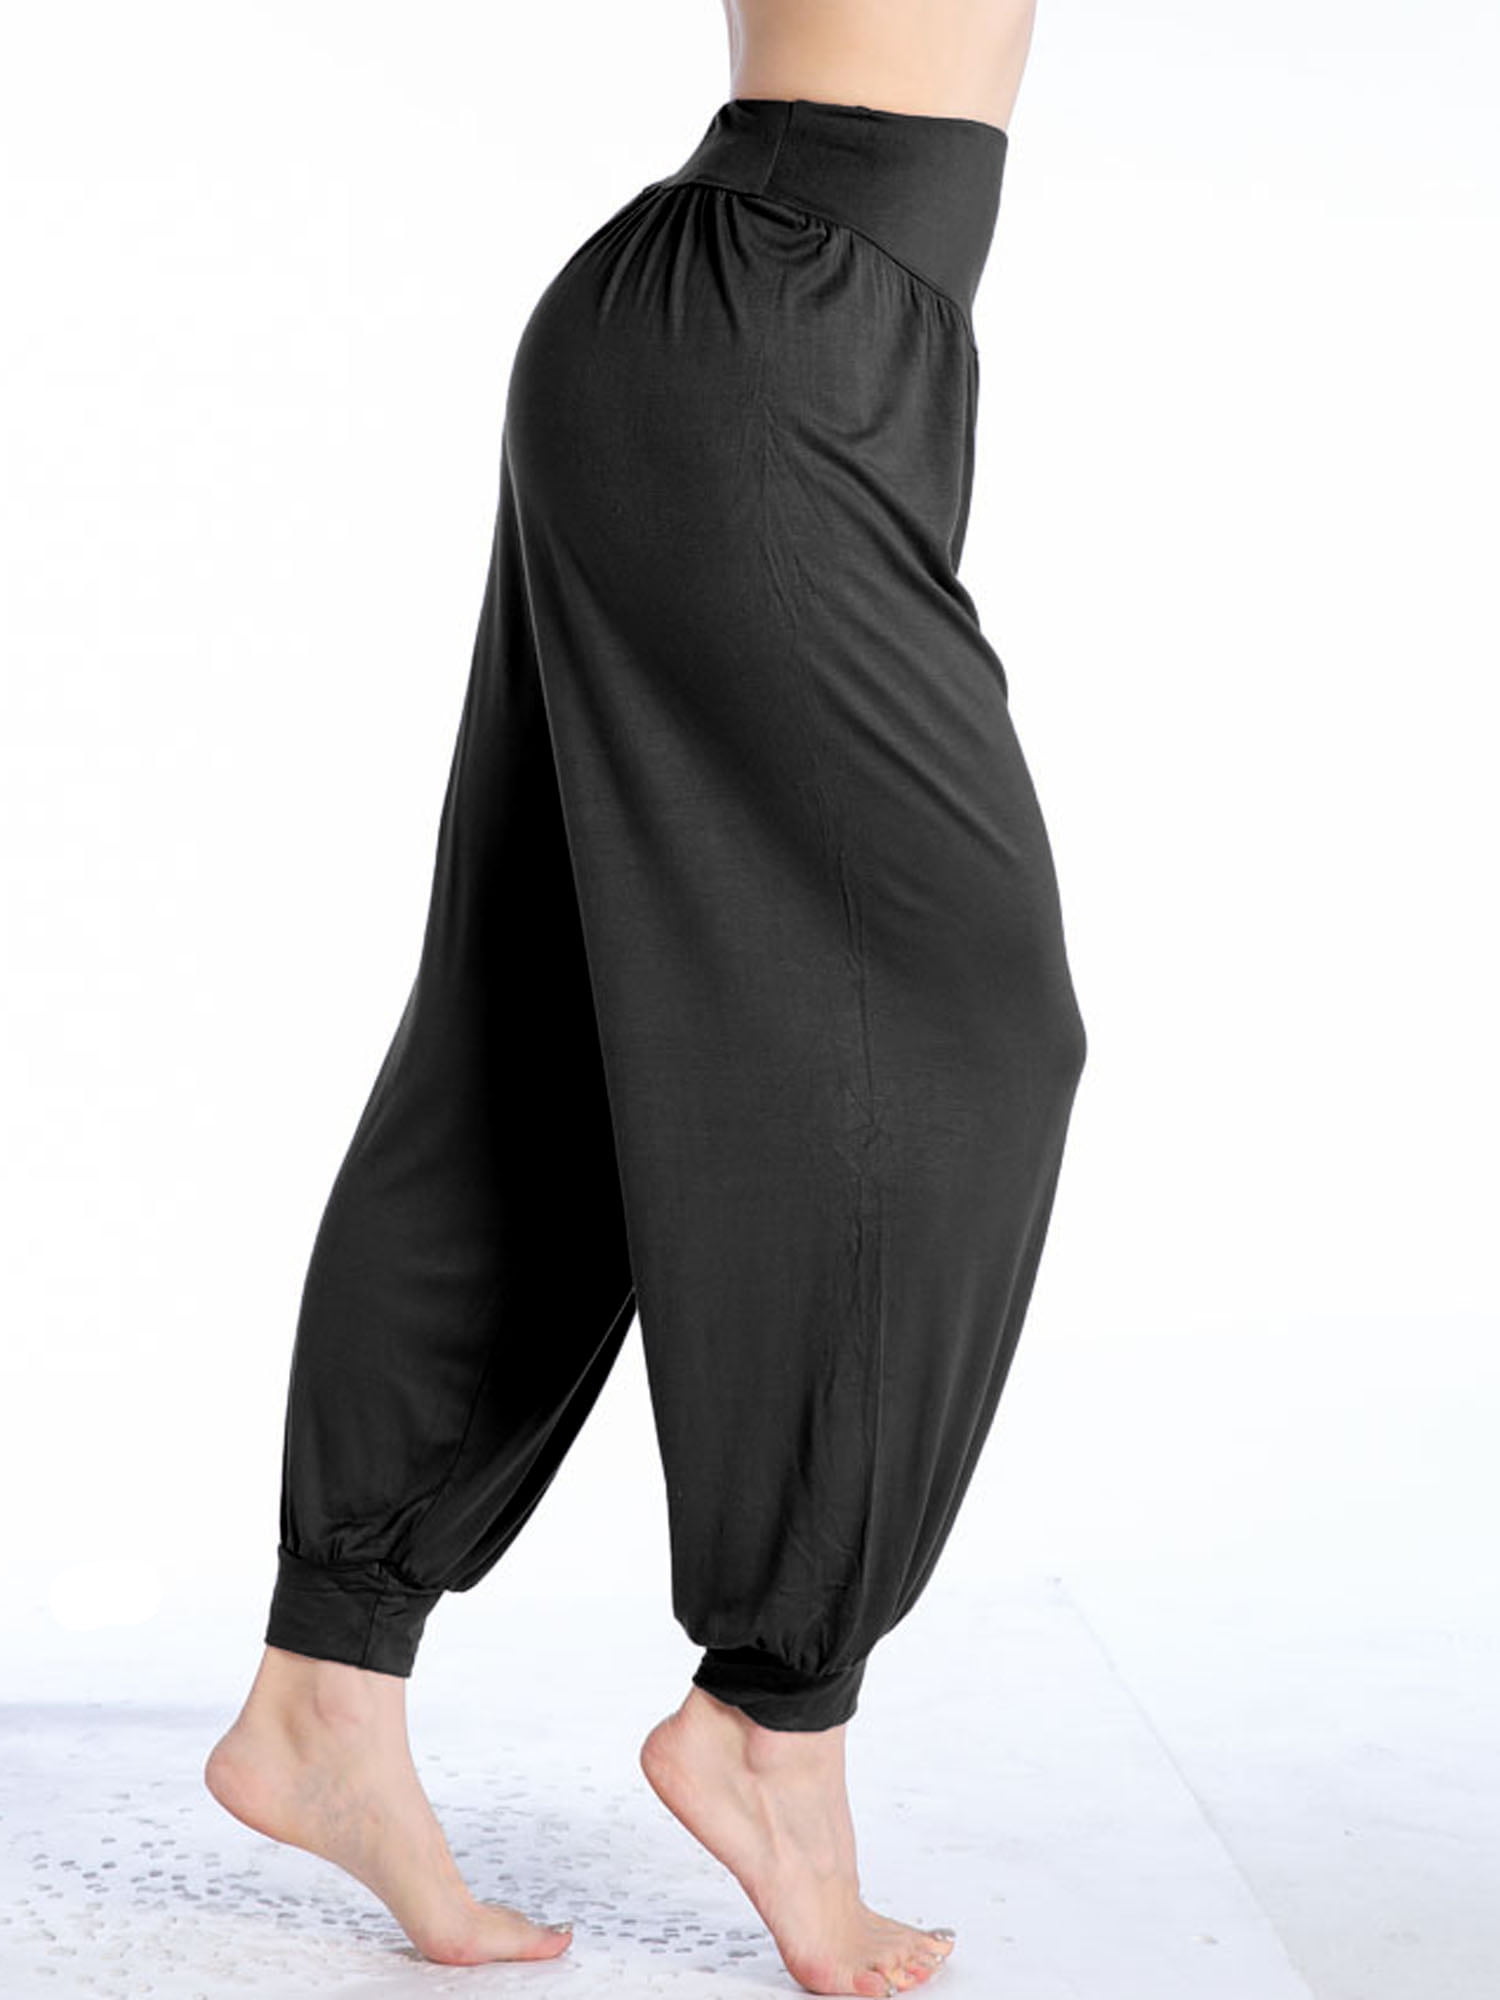 nsendm Unisex Pants Adult Harem Yoga Pants for Women Elastic Mesh Side Slim Yoga  Pants Pants Leggings Sports Running Yoga Pants Fleece Yoga(Black, XL) 